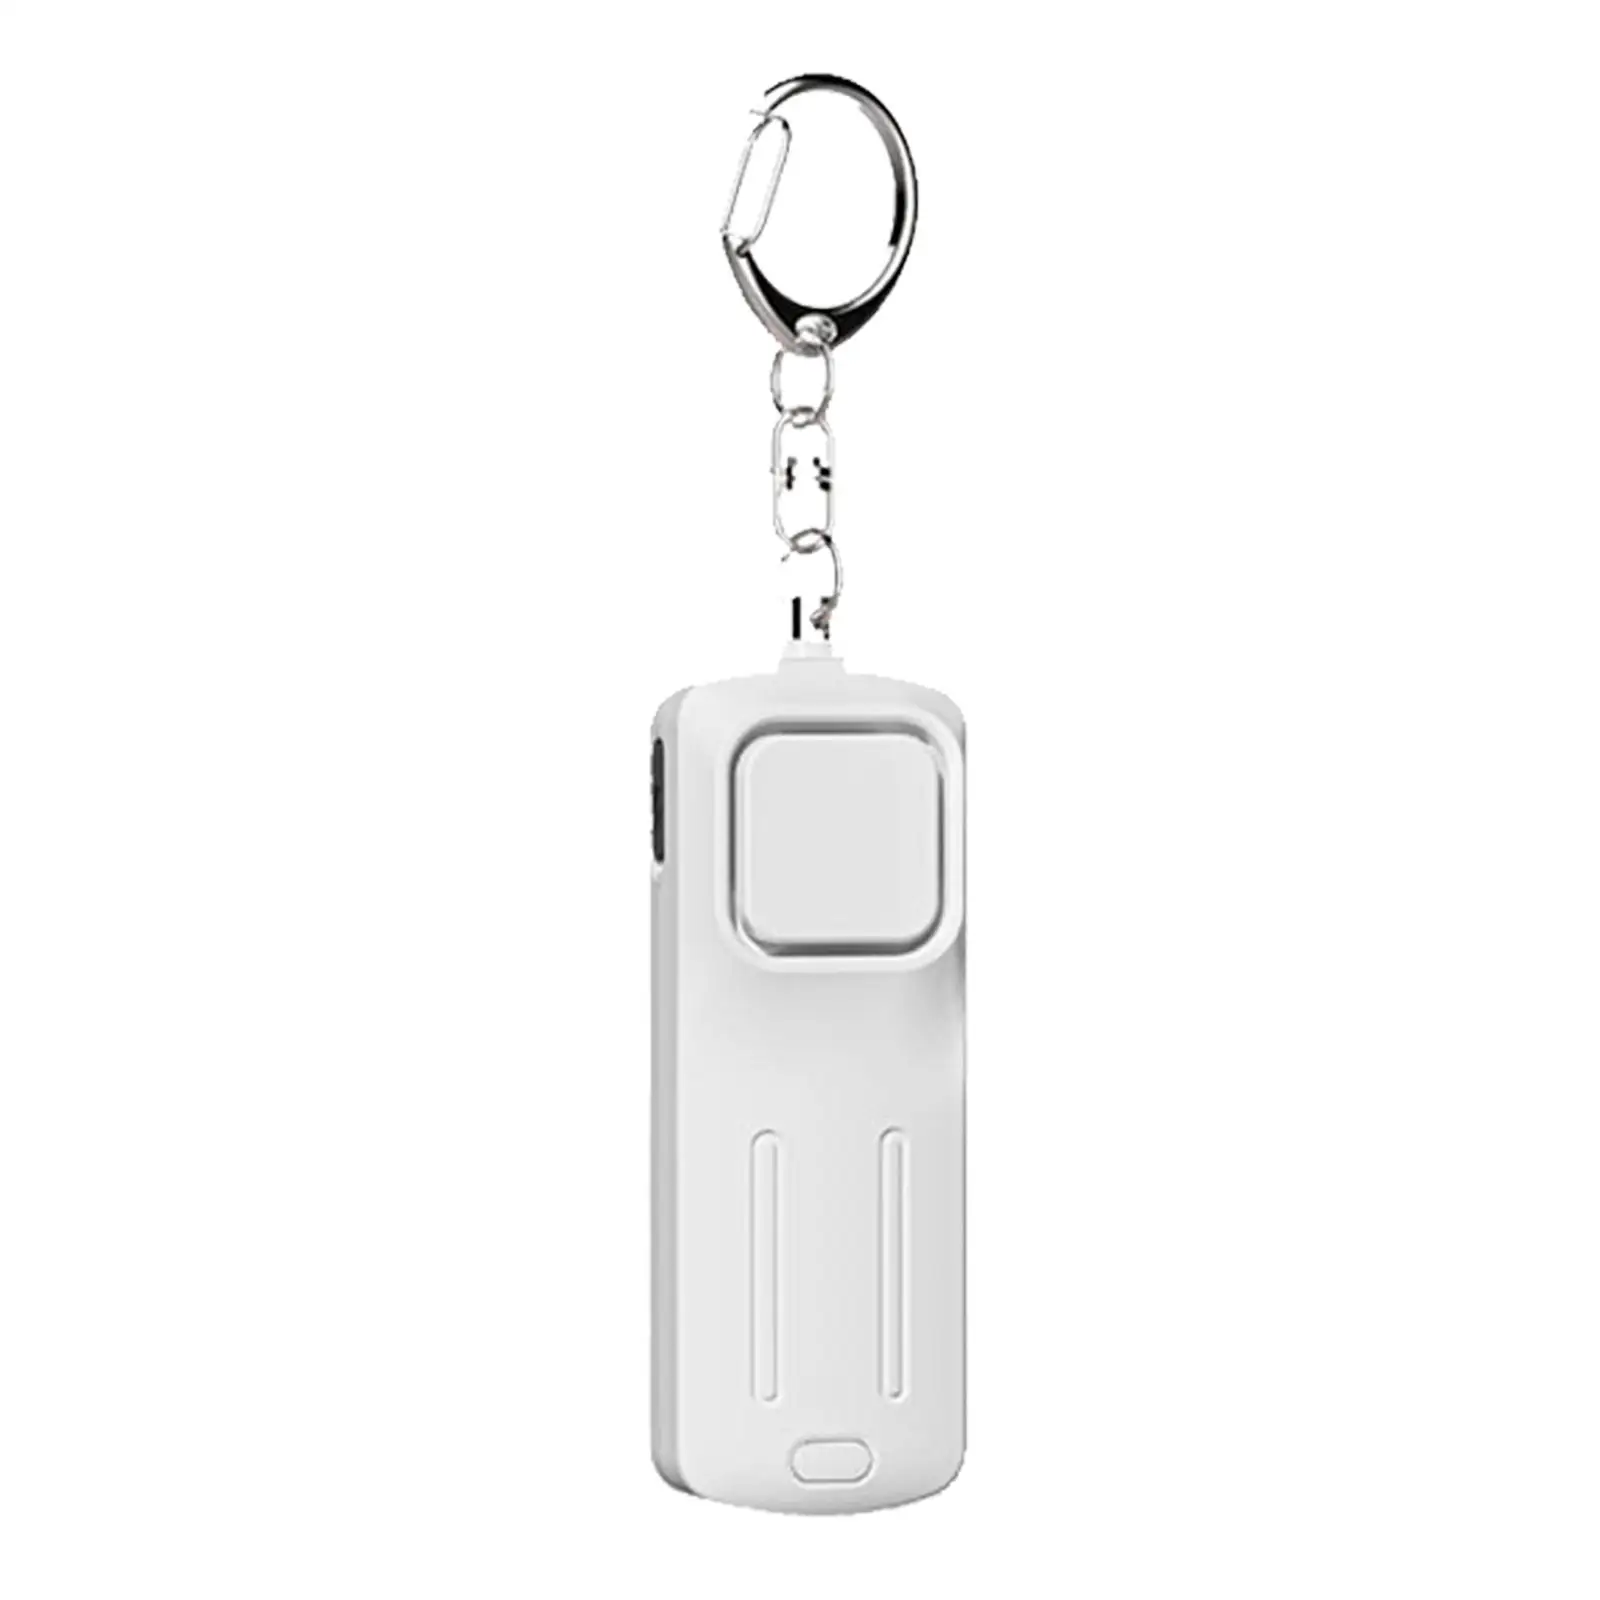 Personal ty Alarm 130dB Mini with LED Flashlight Loud Siren Self Defense Alarm for Panic Family Women Children Elderly